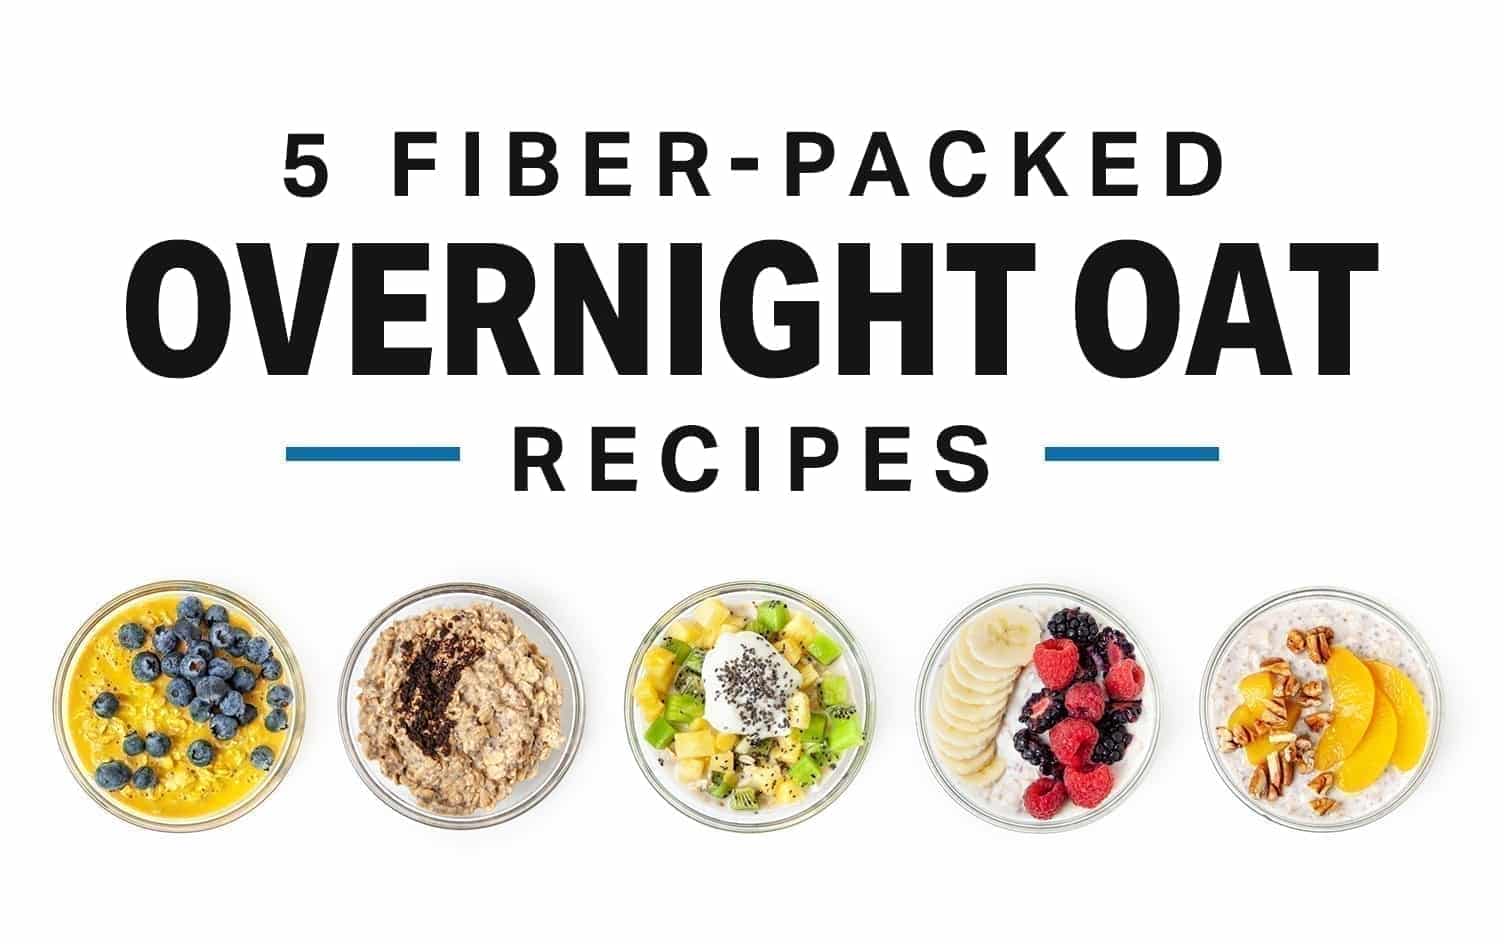 5 Fiber-Packed Overnight Oat Recipes